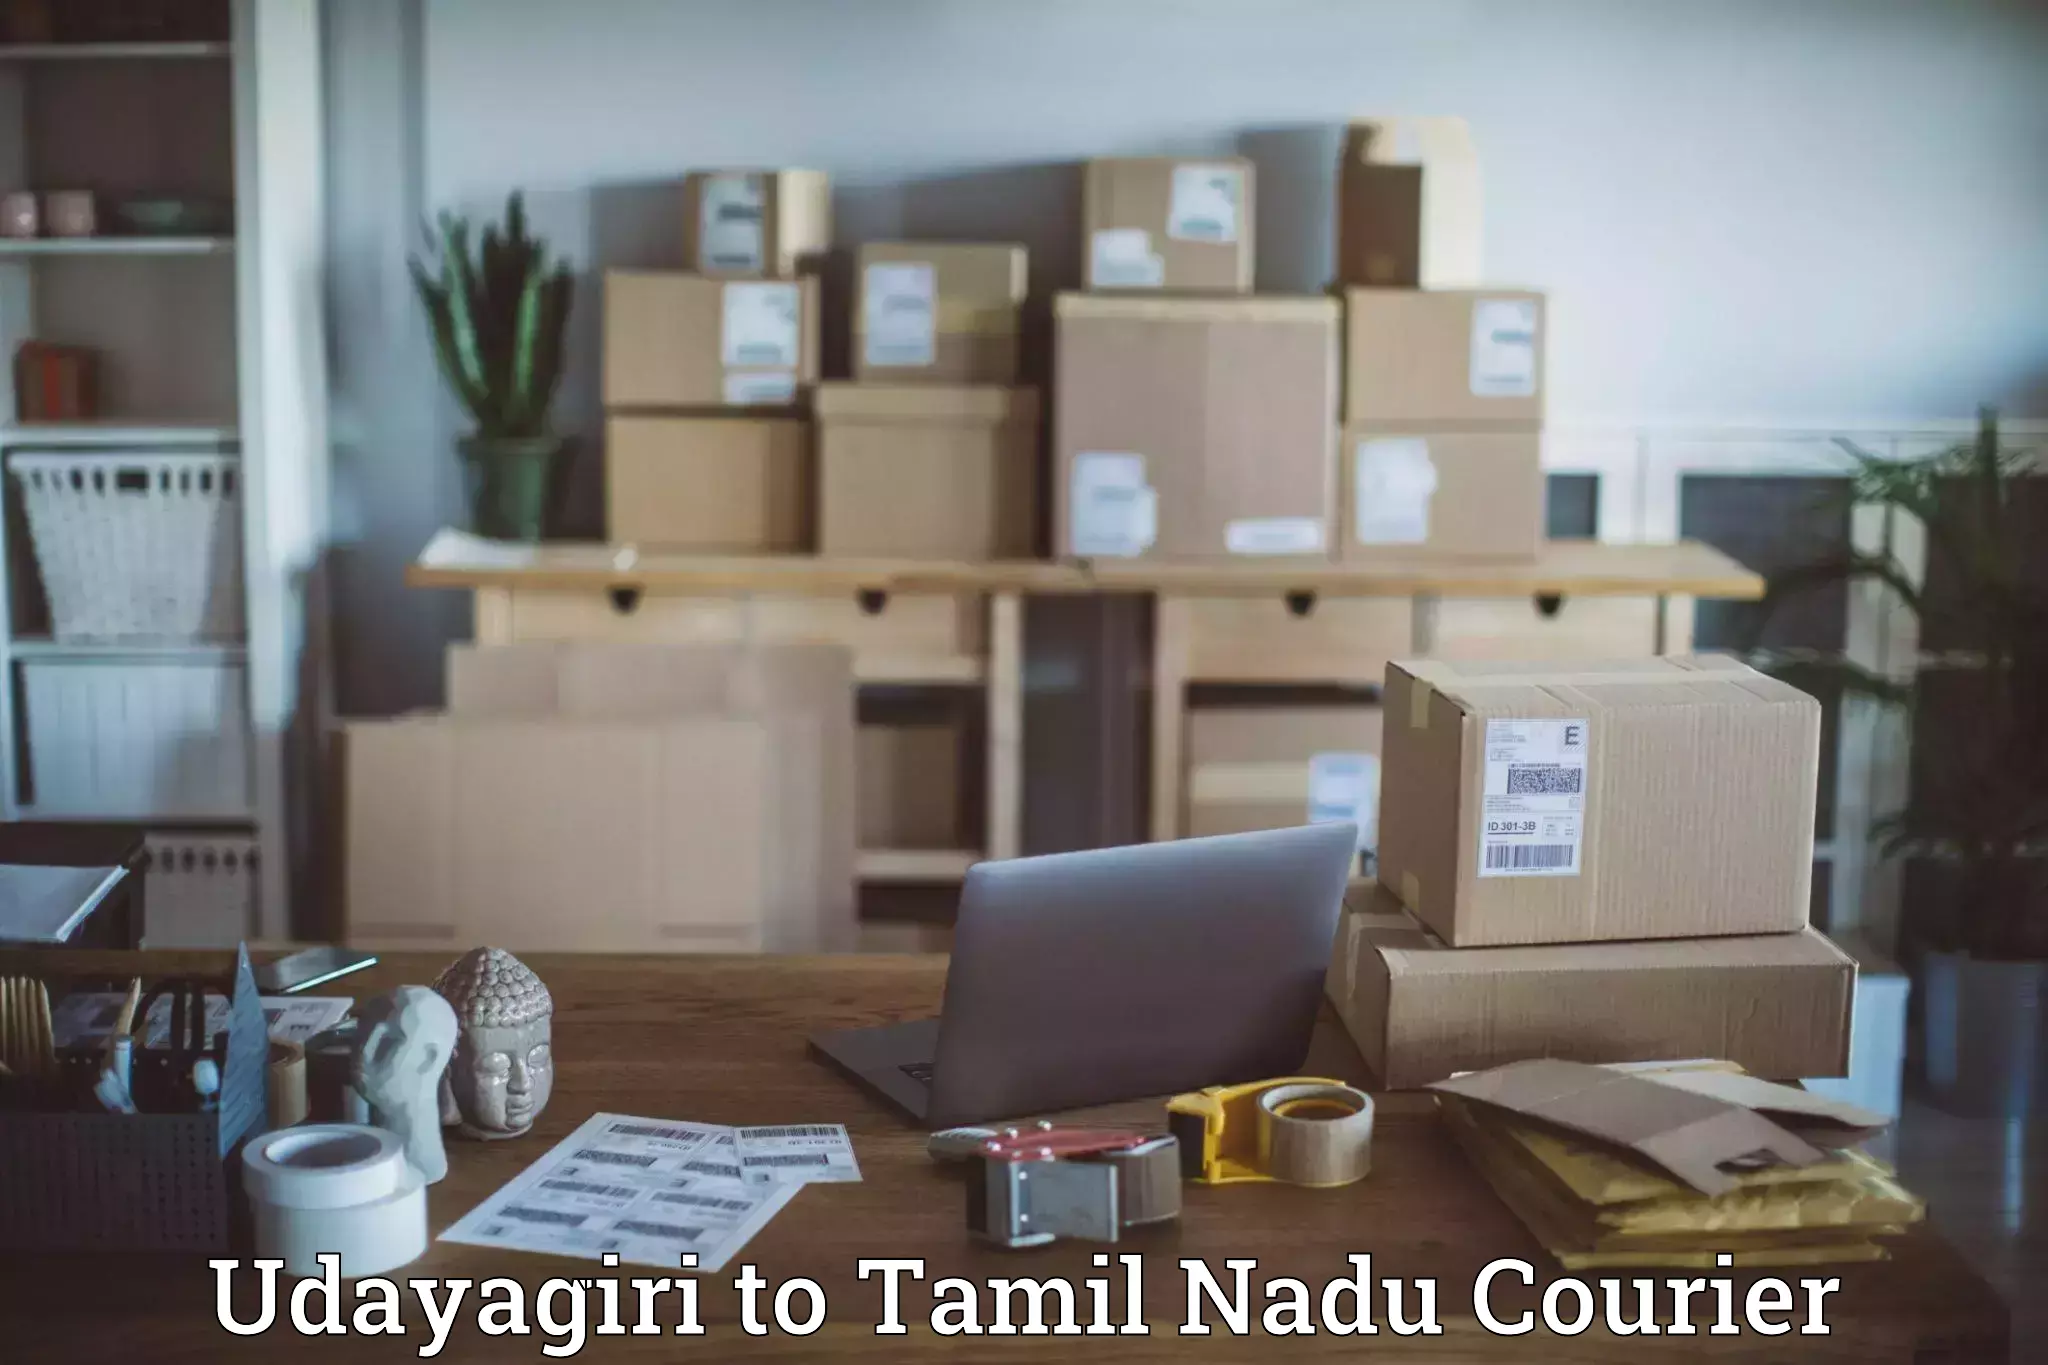 Courier service comparison Udayagiri to Tirupur